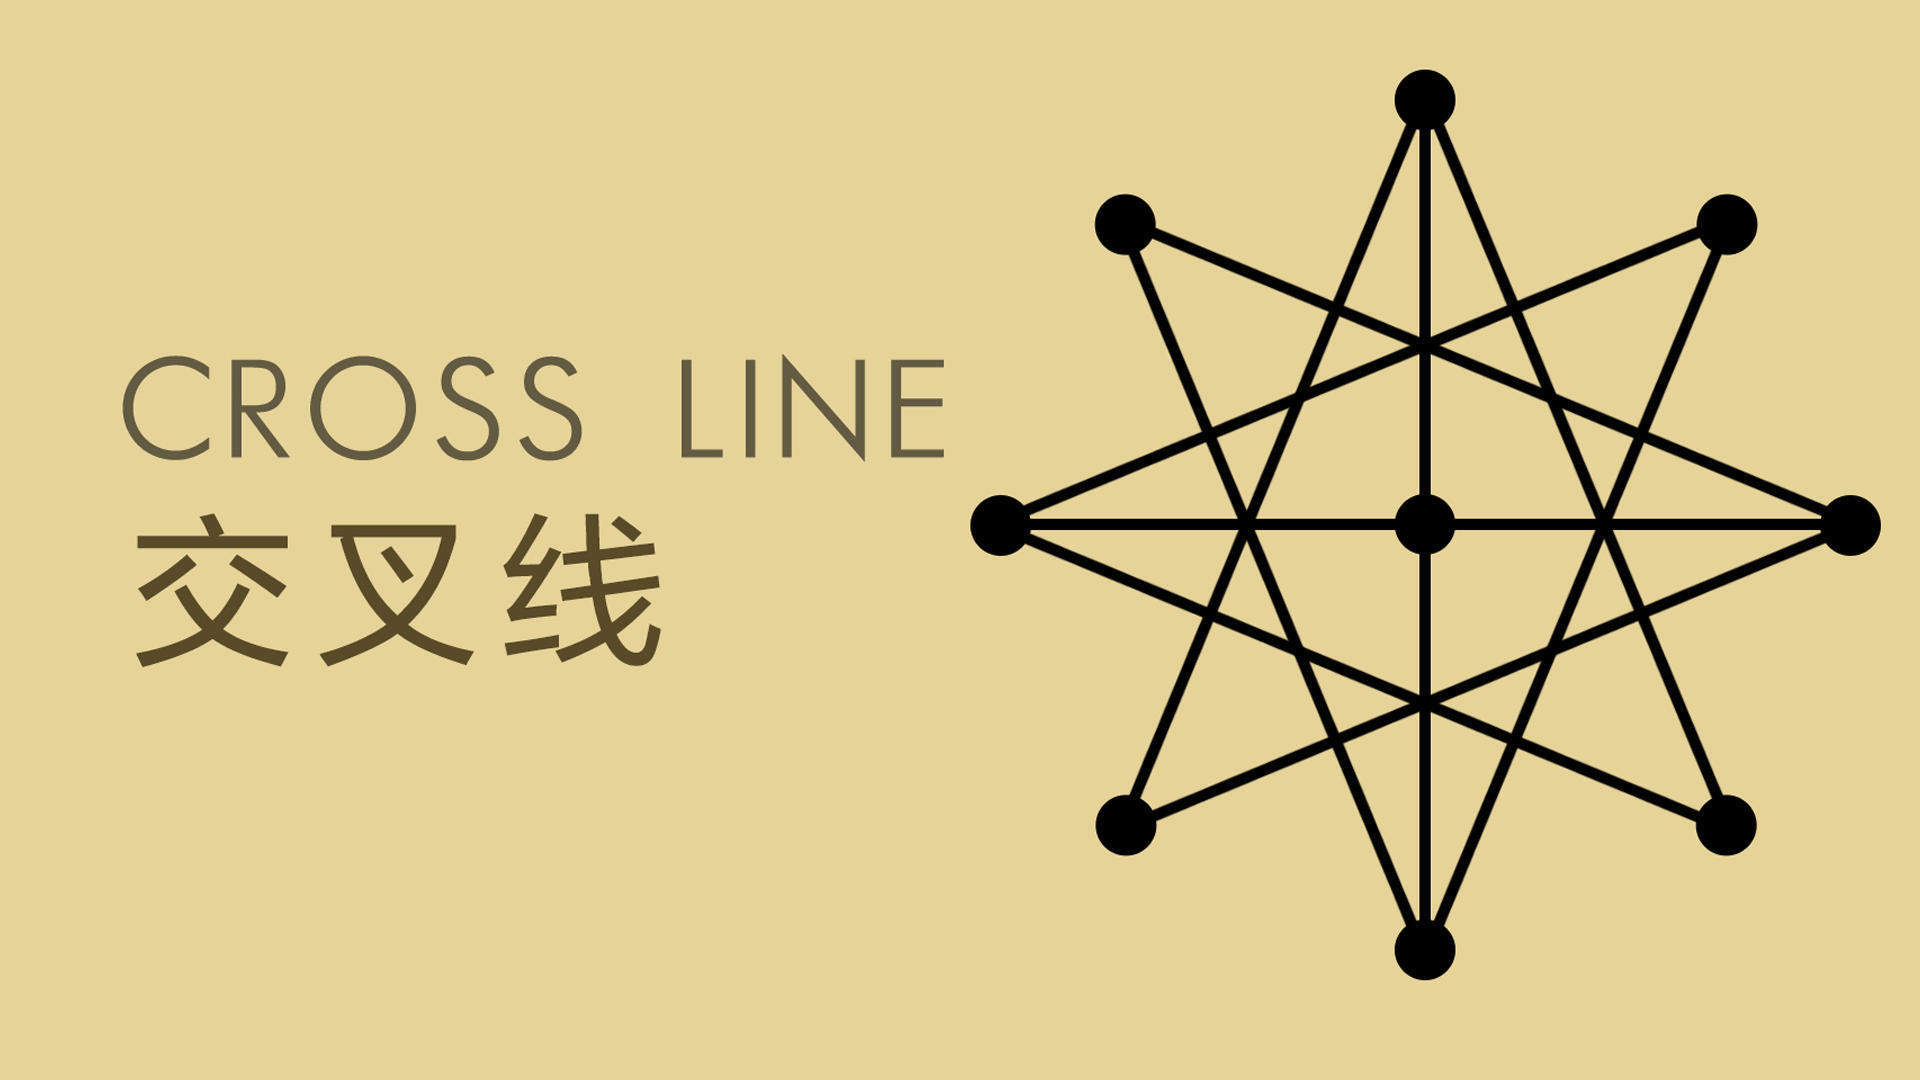 Banner of 交叉線 1.04